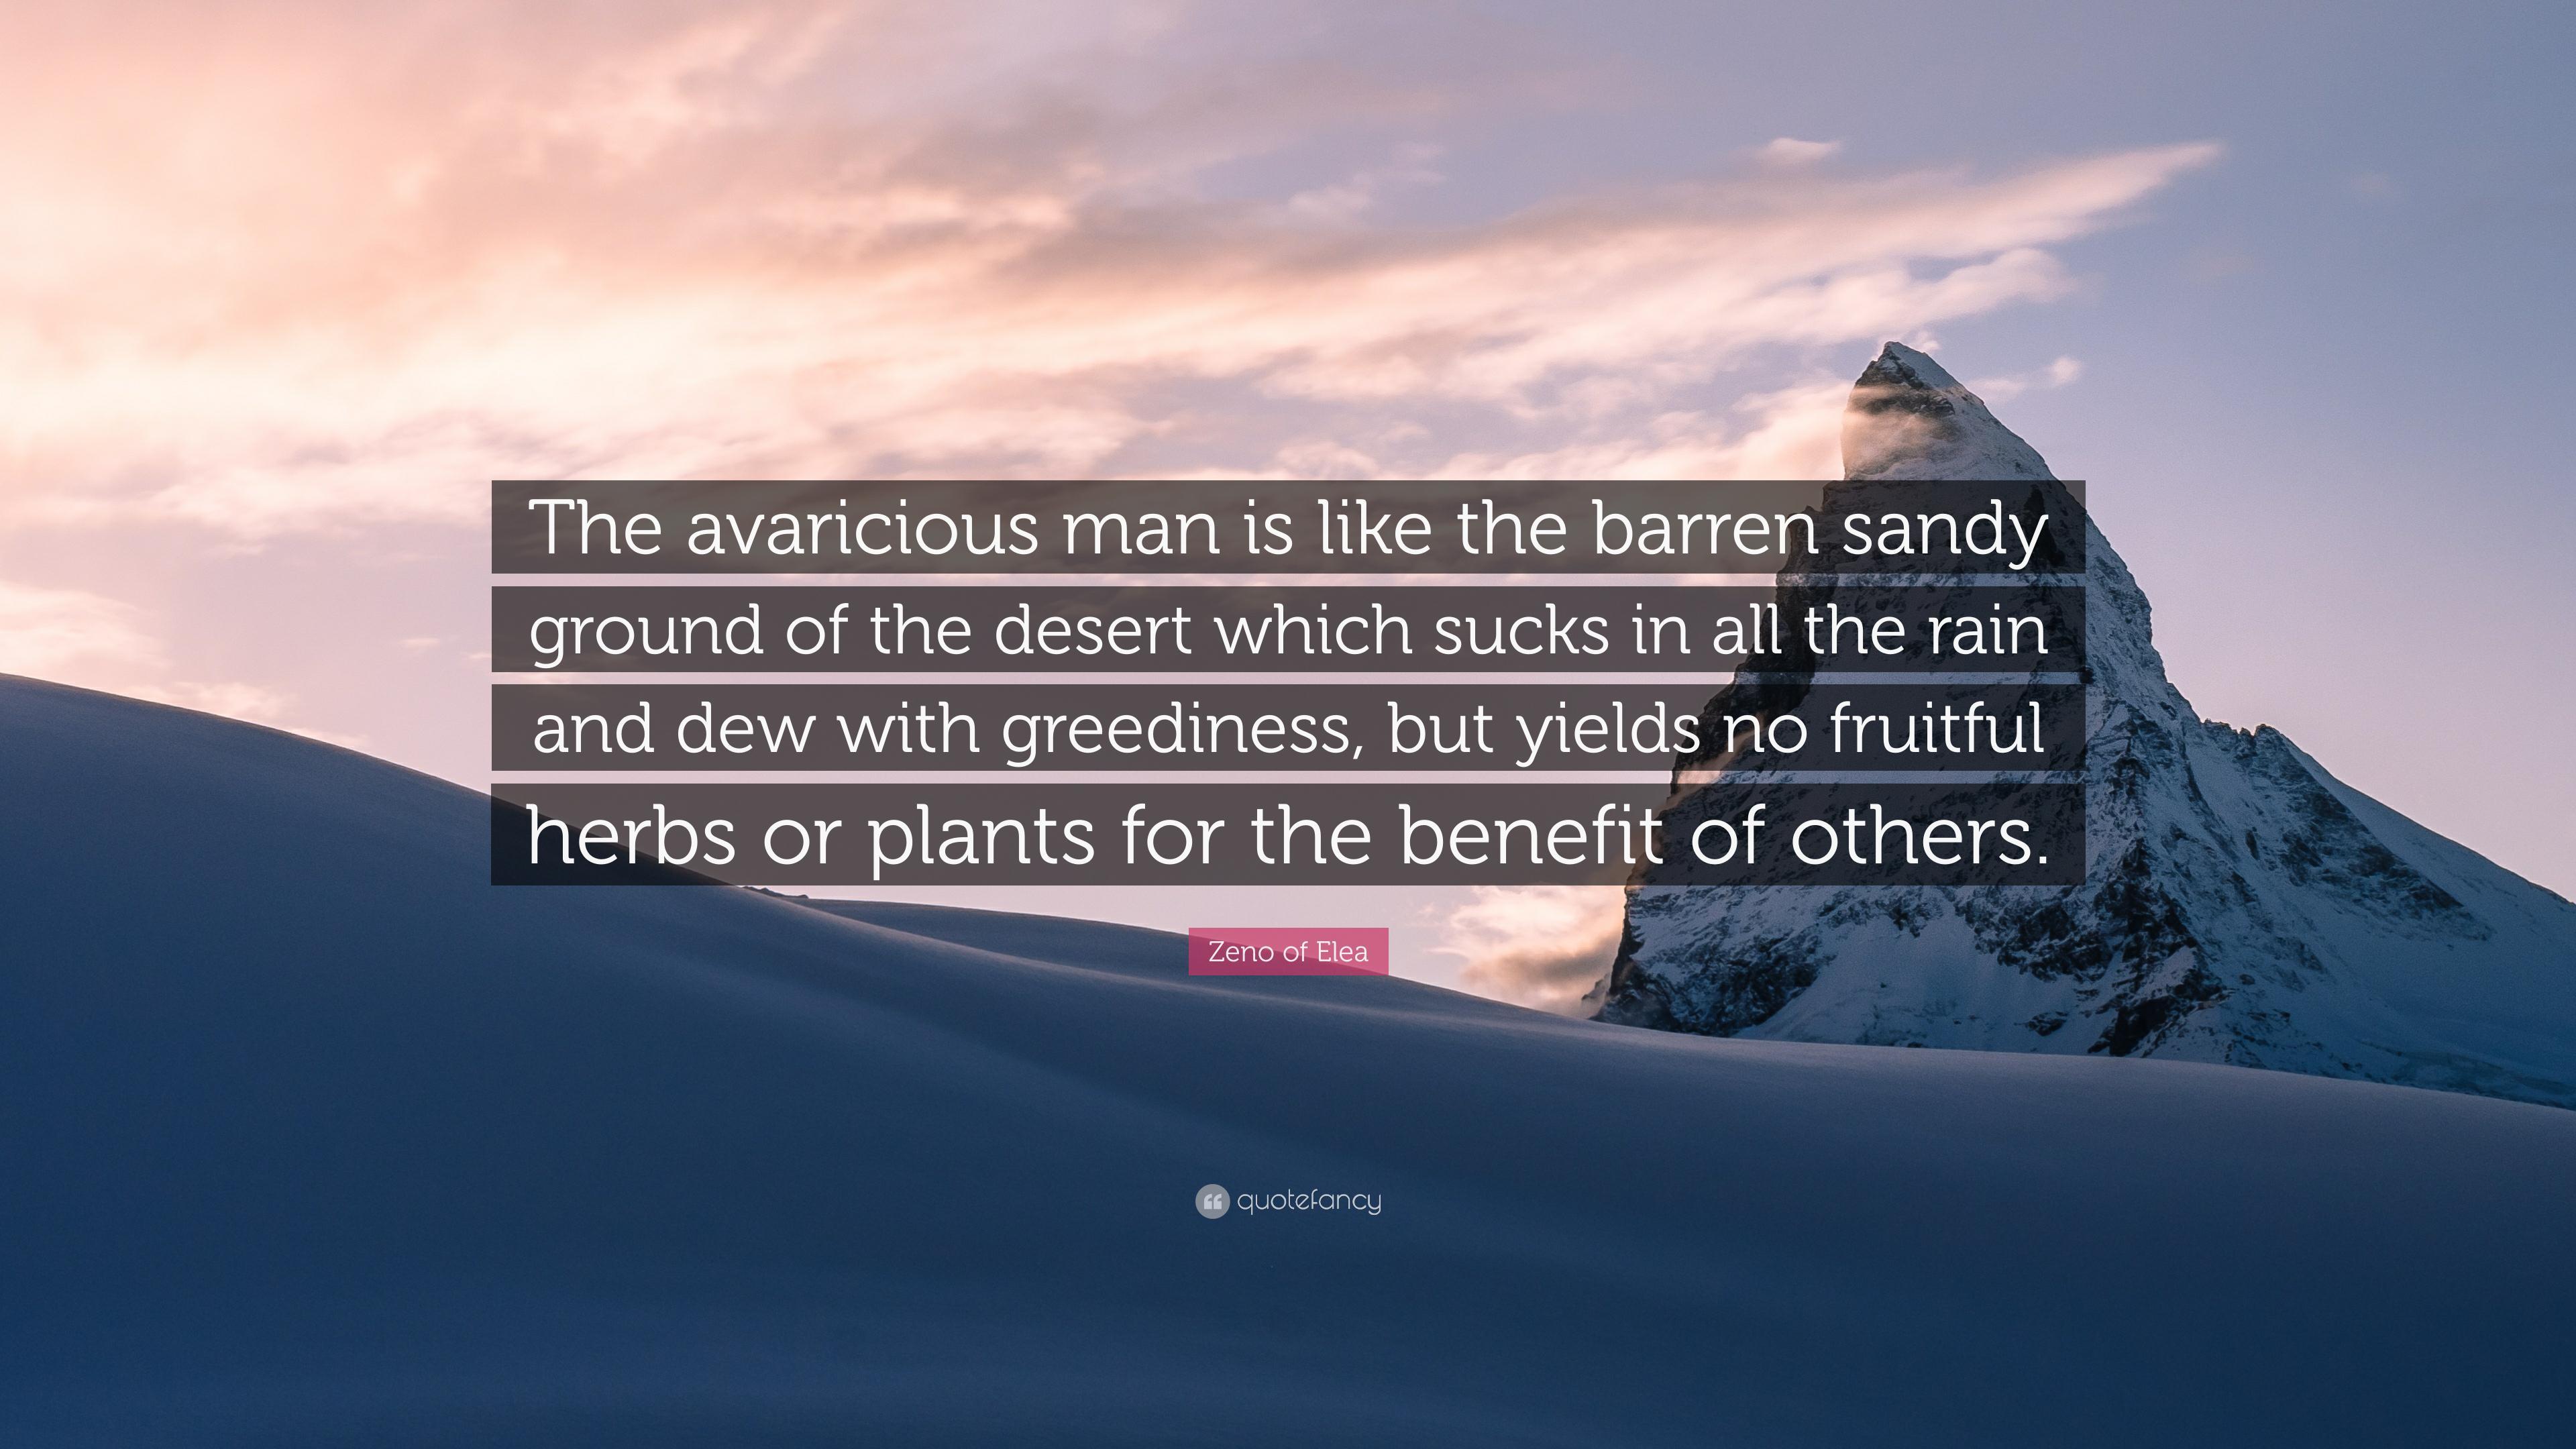 Zeno of Elea Quote: “The avaricious man is like the barren sandy